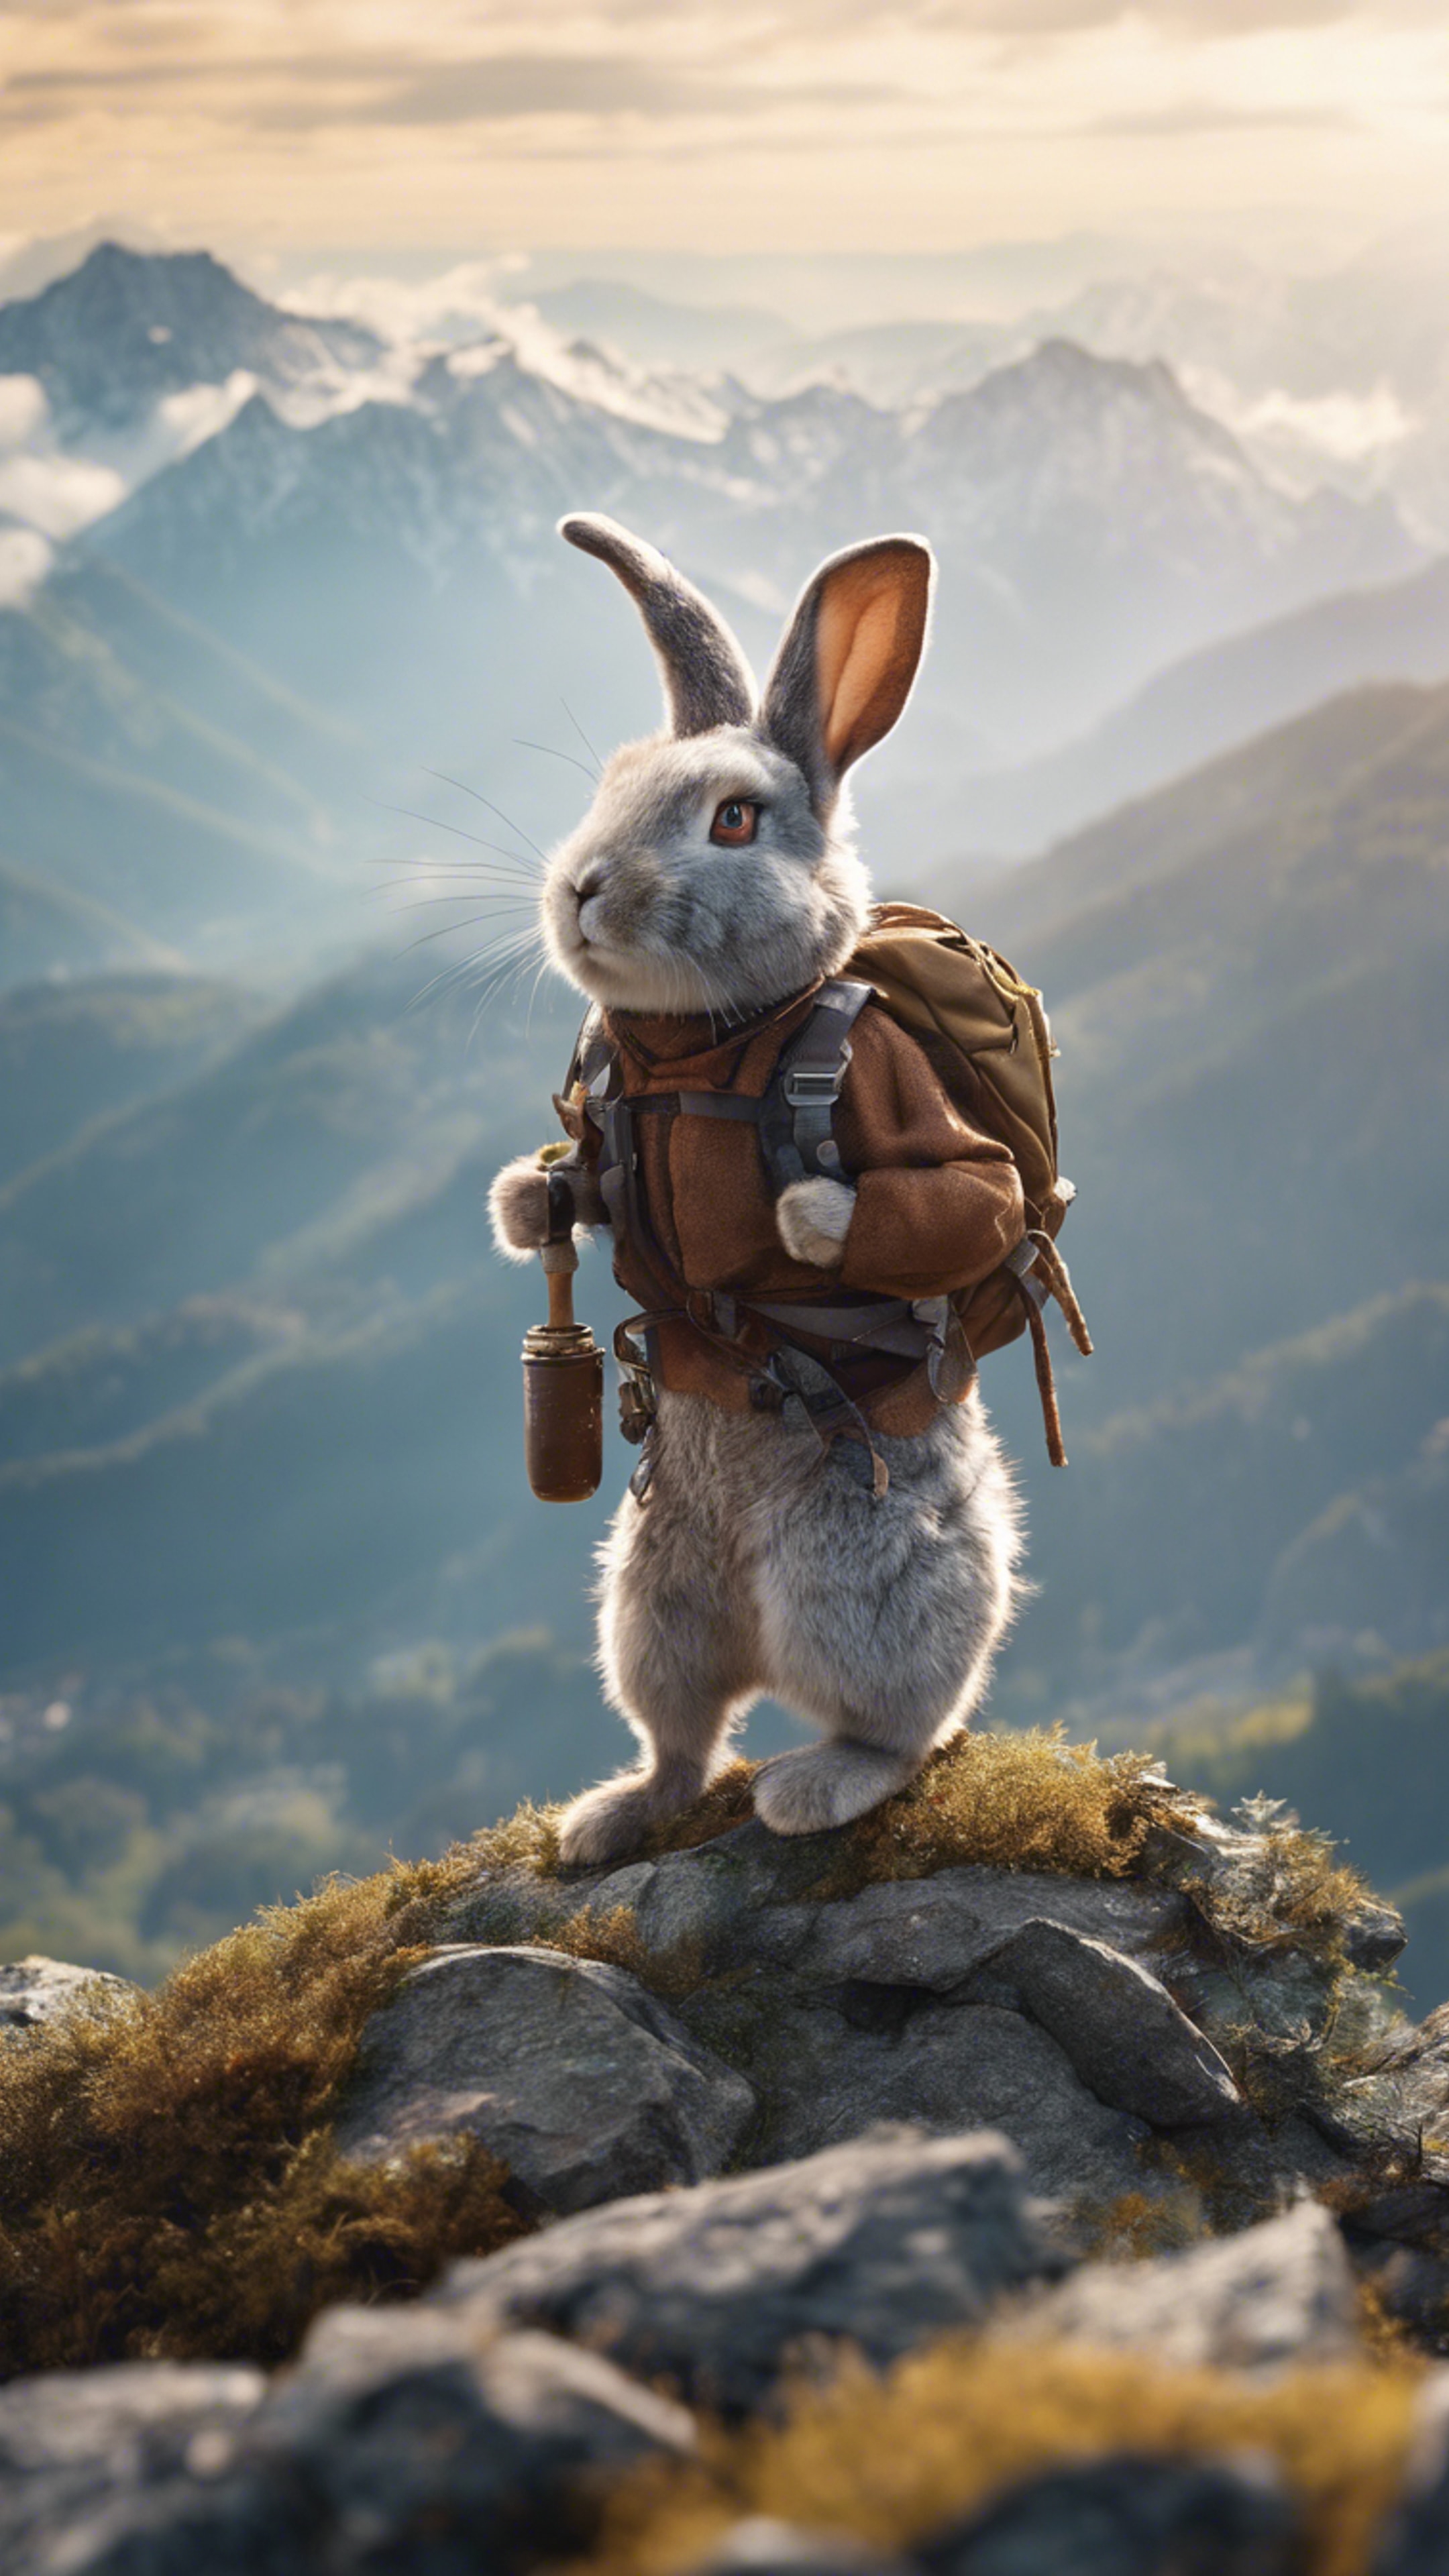 A Rabbit mountaineer conquering a treacherous peak. ផ្ទាំង​រូបភាព[faadaab6eec04e17a877]